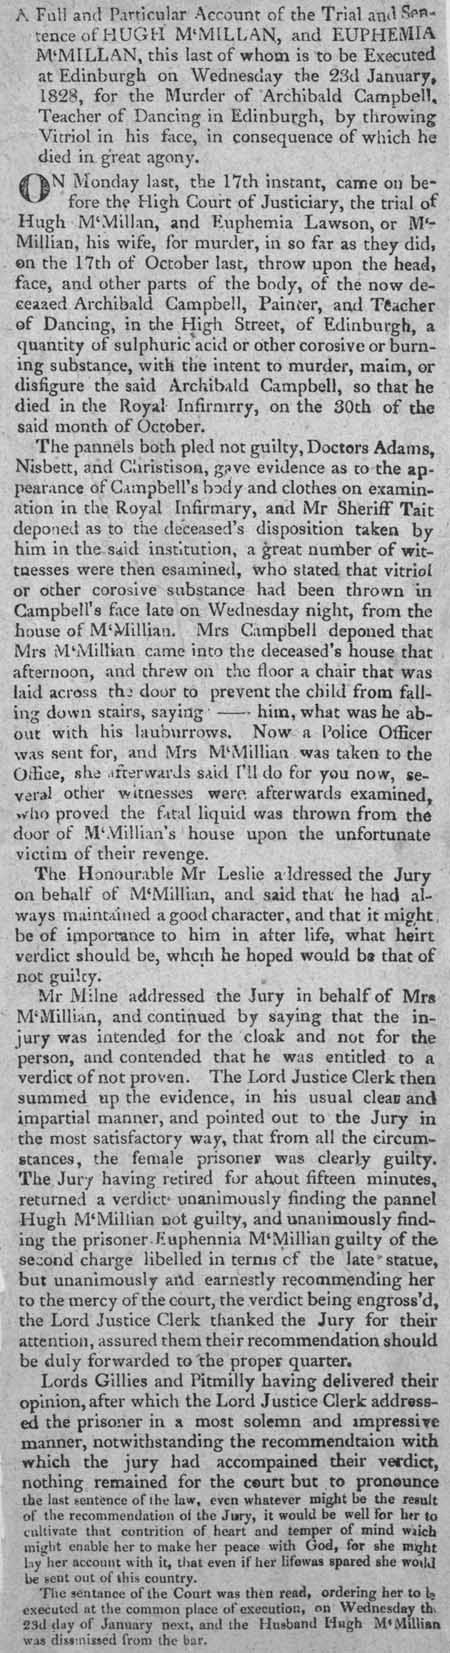 Broadside detailing the trial and sentence of Hugh and Euphemia McMillan